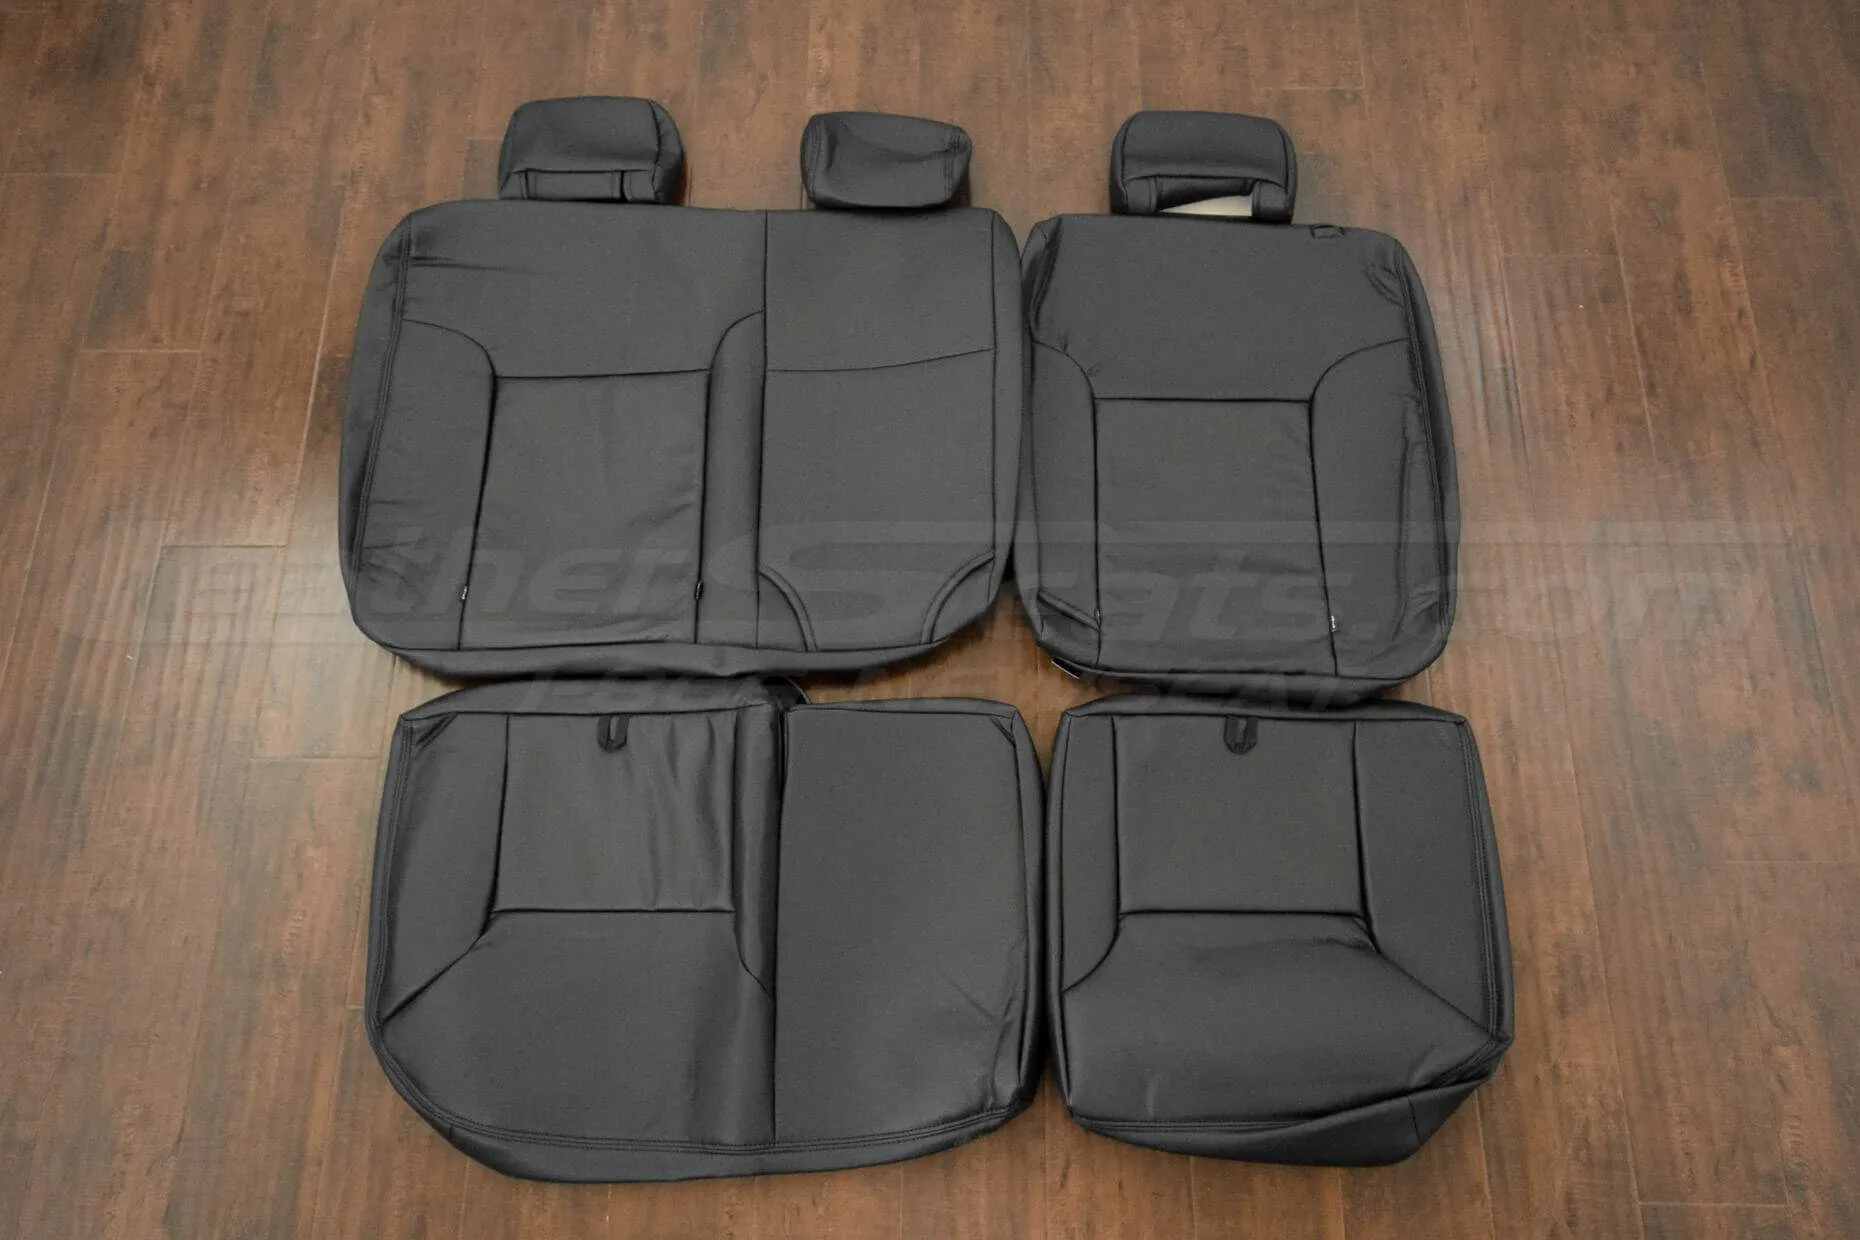 Toyota Tacoma Rear Seat Upholstery Kit - Black